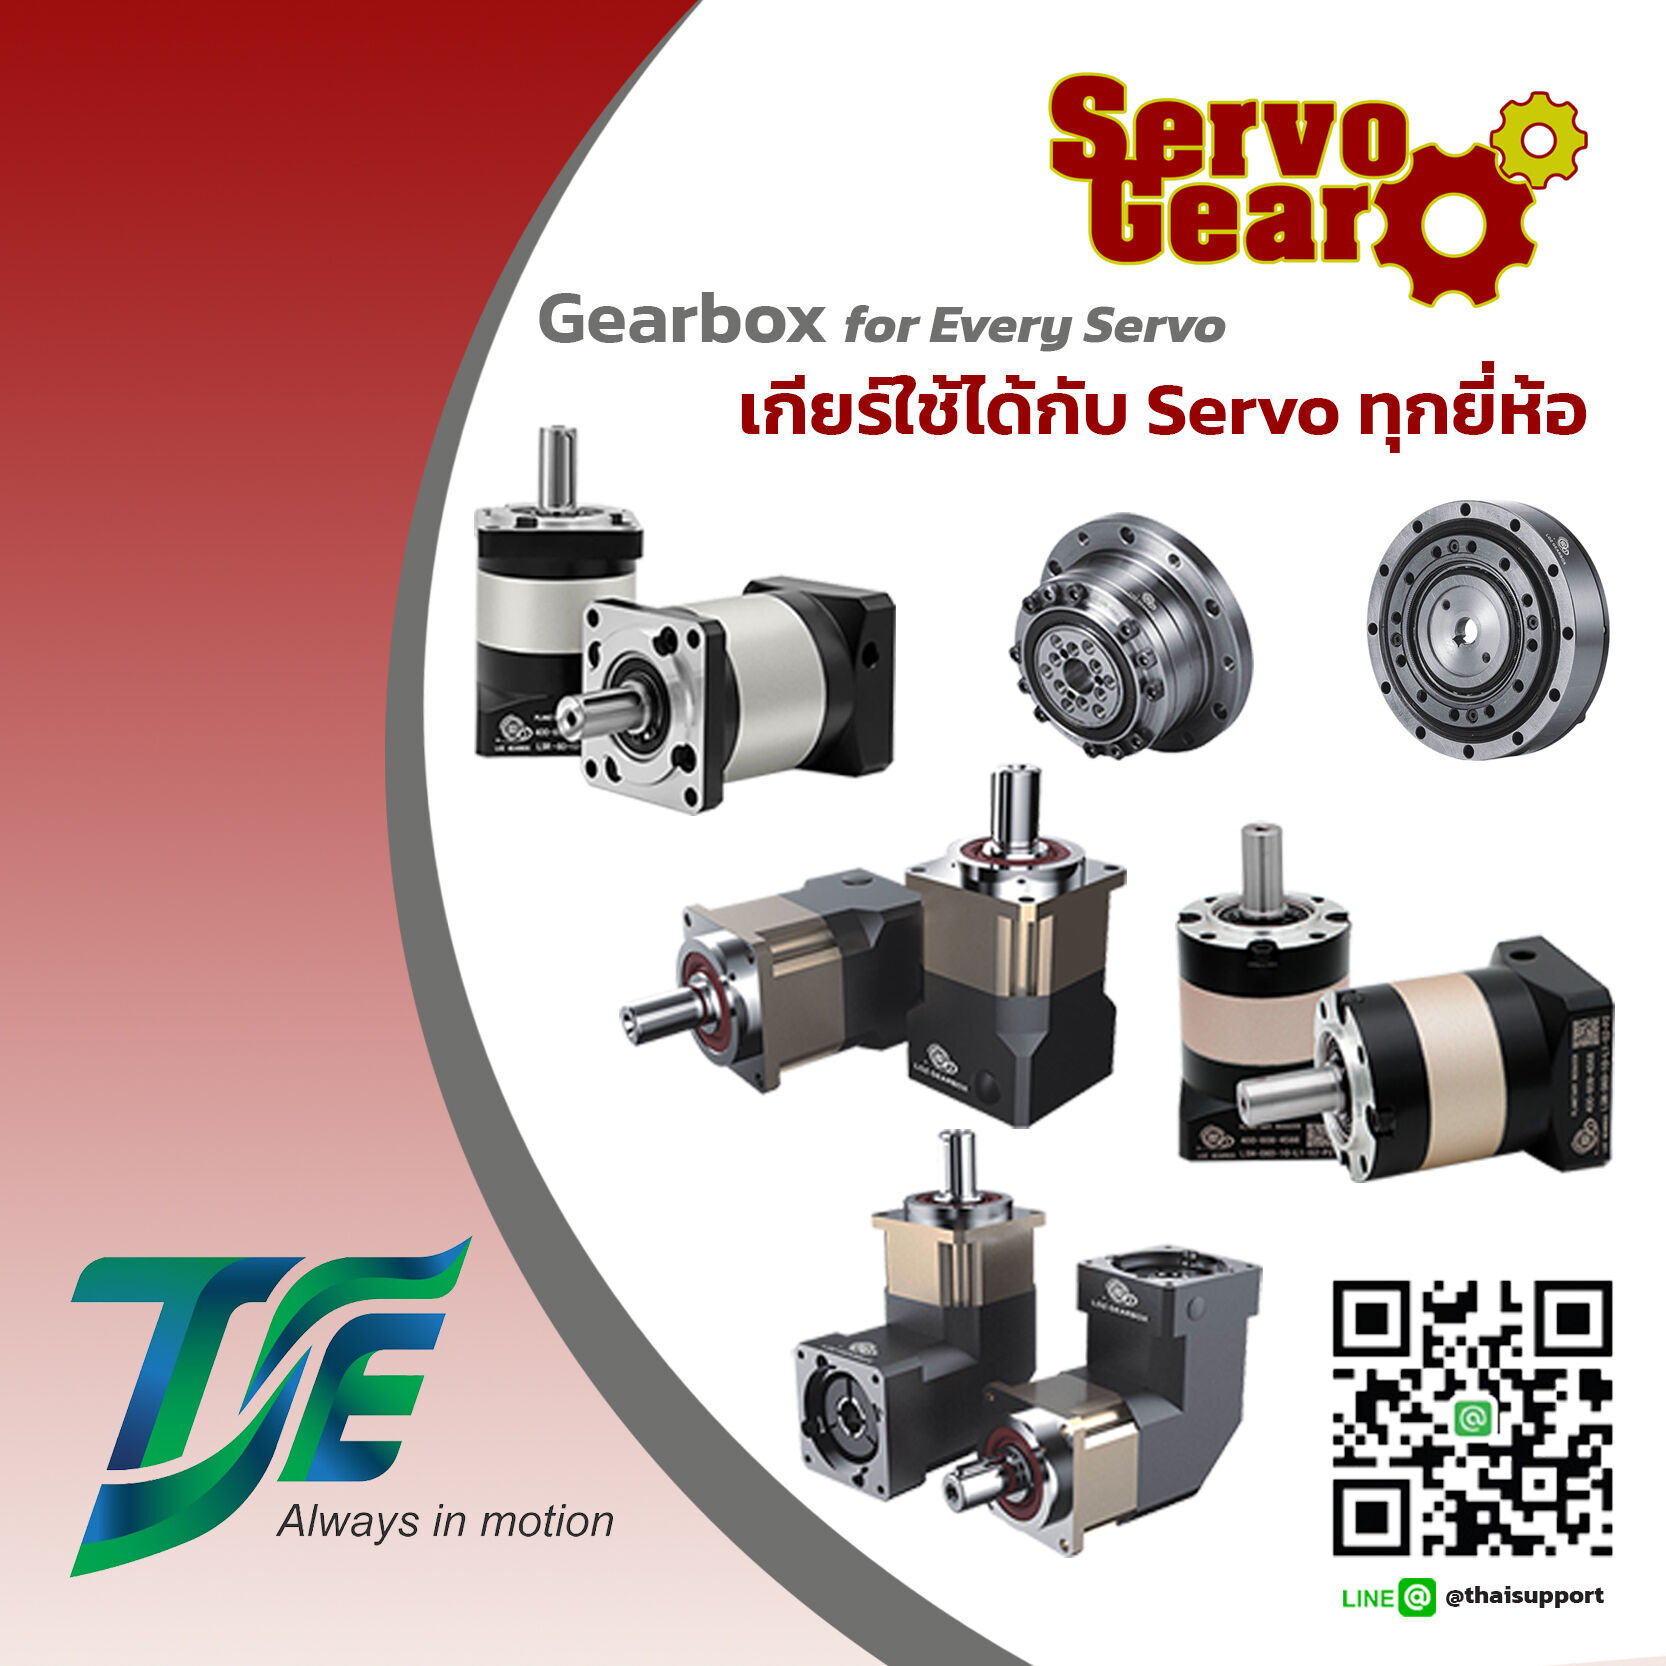 ServoGearbox
ใช้ได้กับเซอร์โวทุกยี่ห้อ
gearbox for every servo